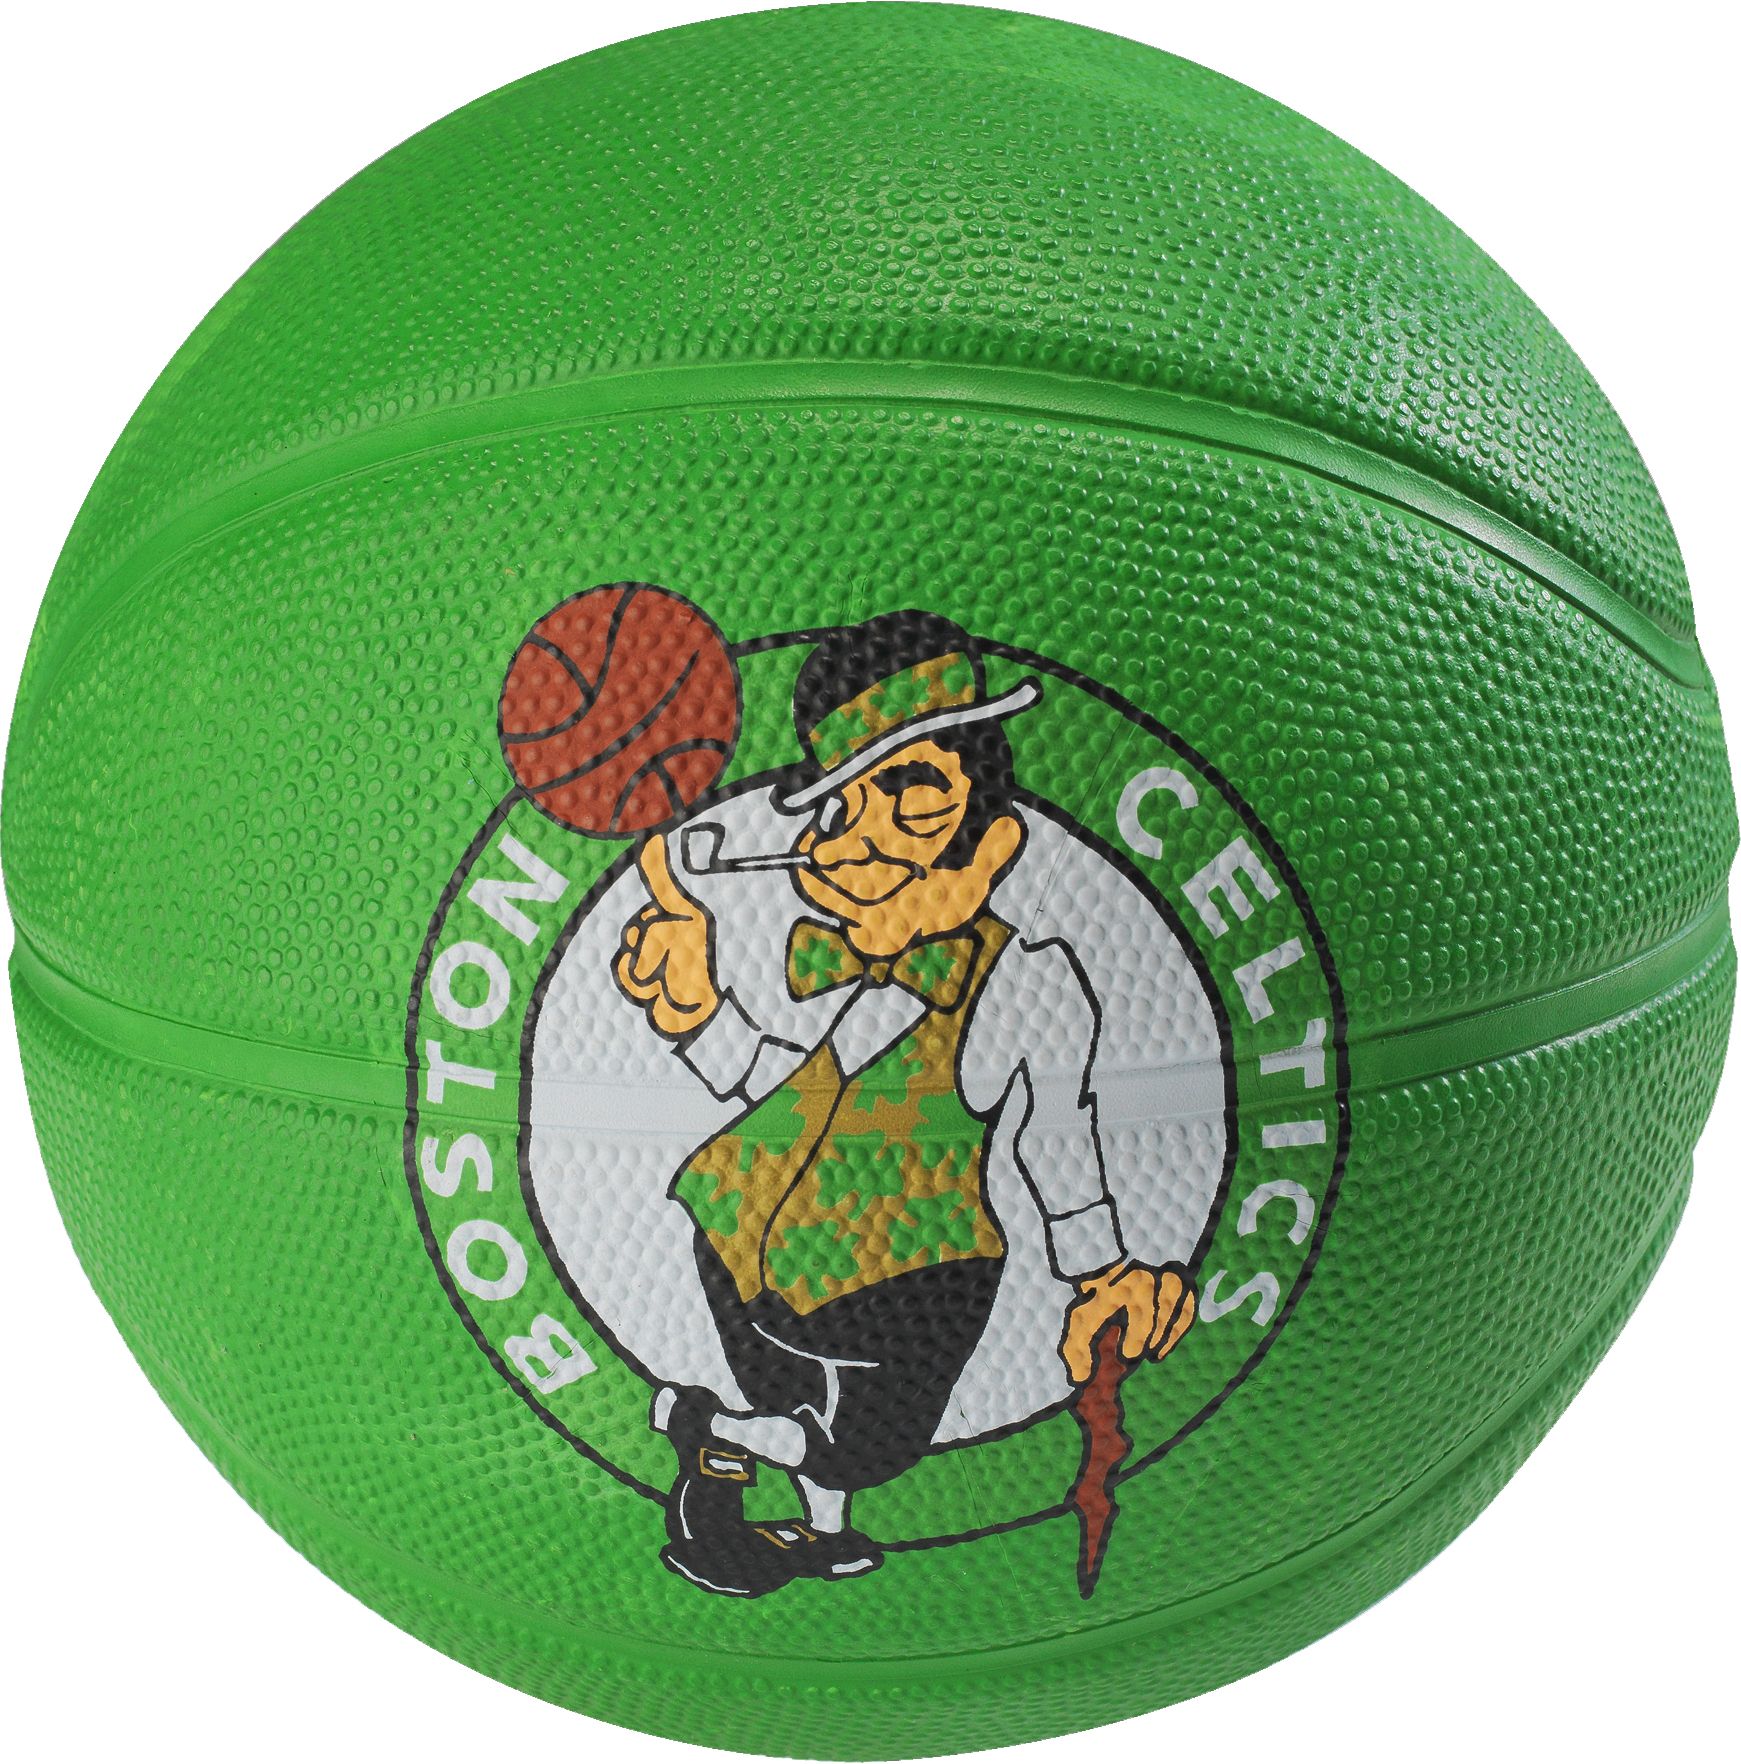 Spalding Boston Celtics Mini Basketball 